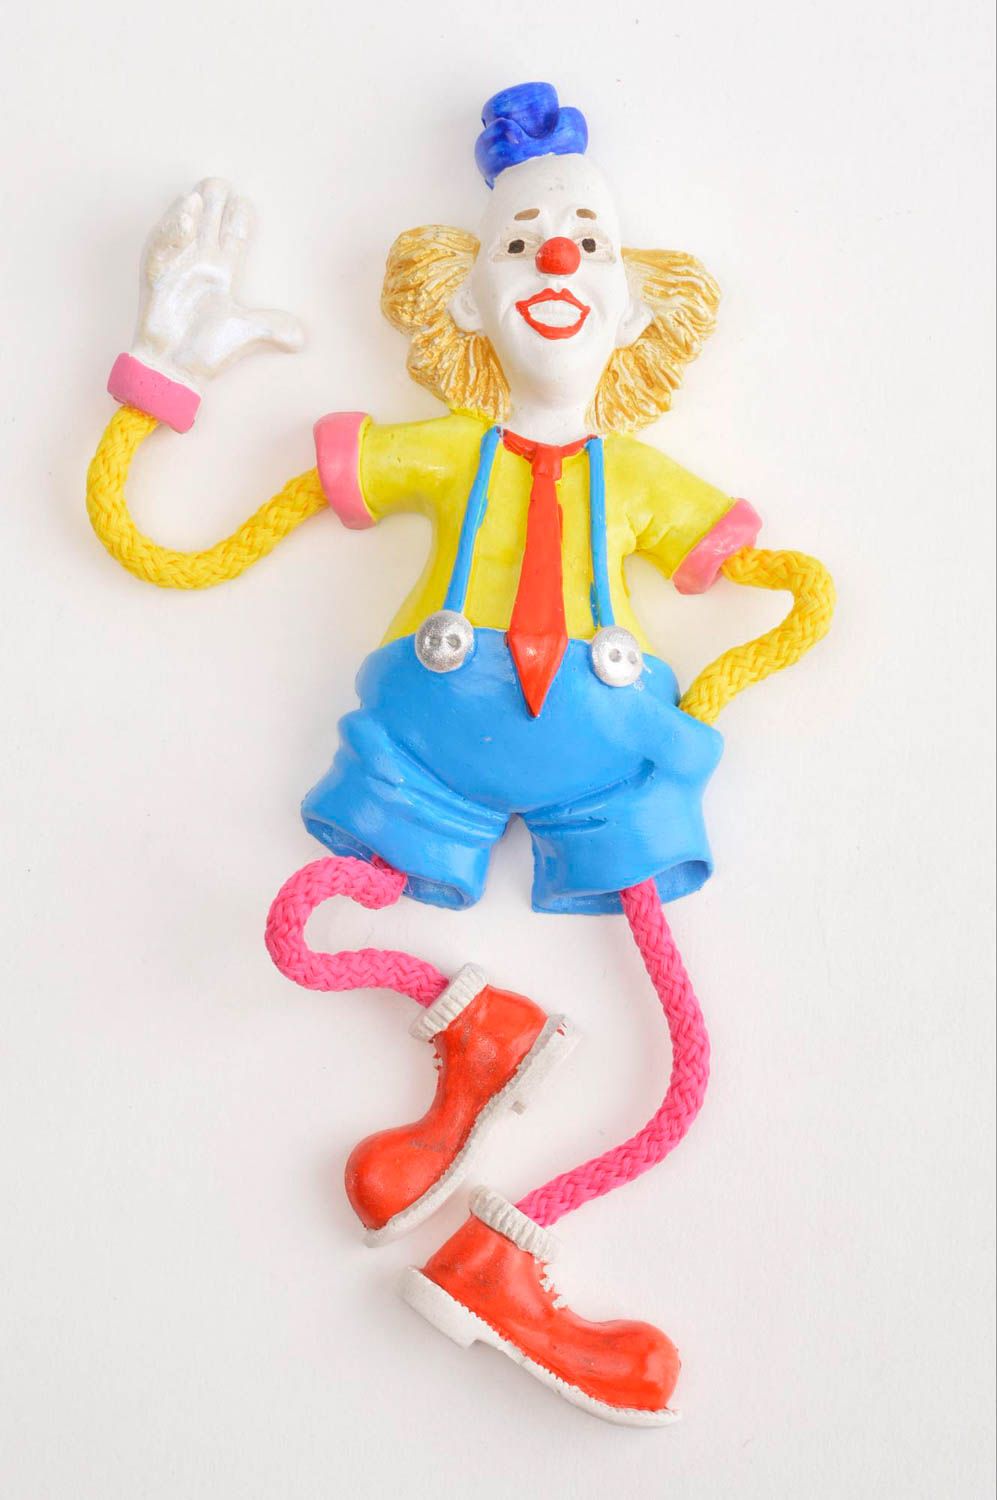 Imán de nevera hecho a mano souvenir original con forma de clown regalo original foto 2